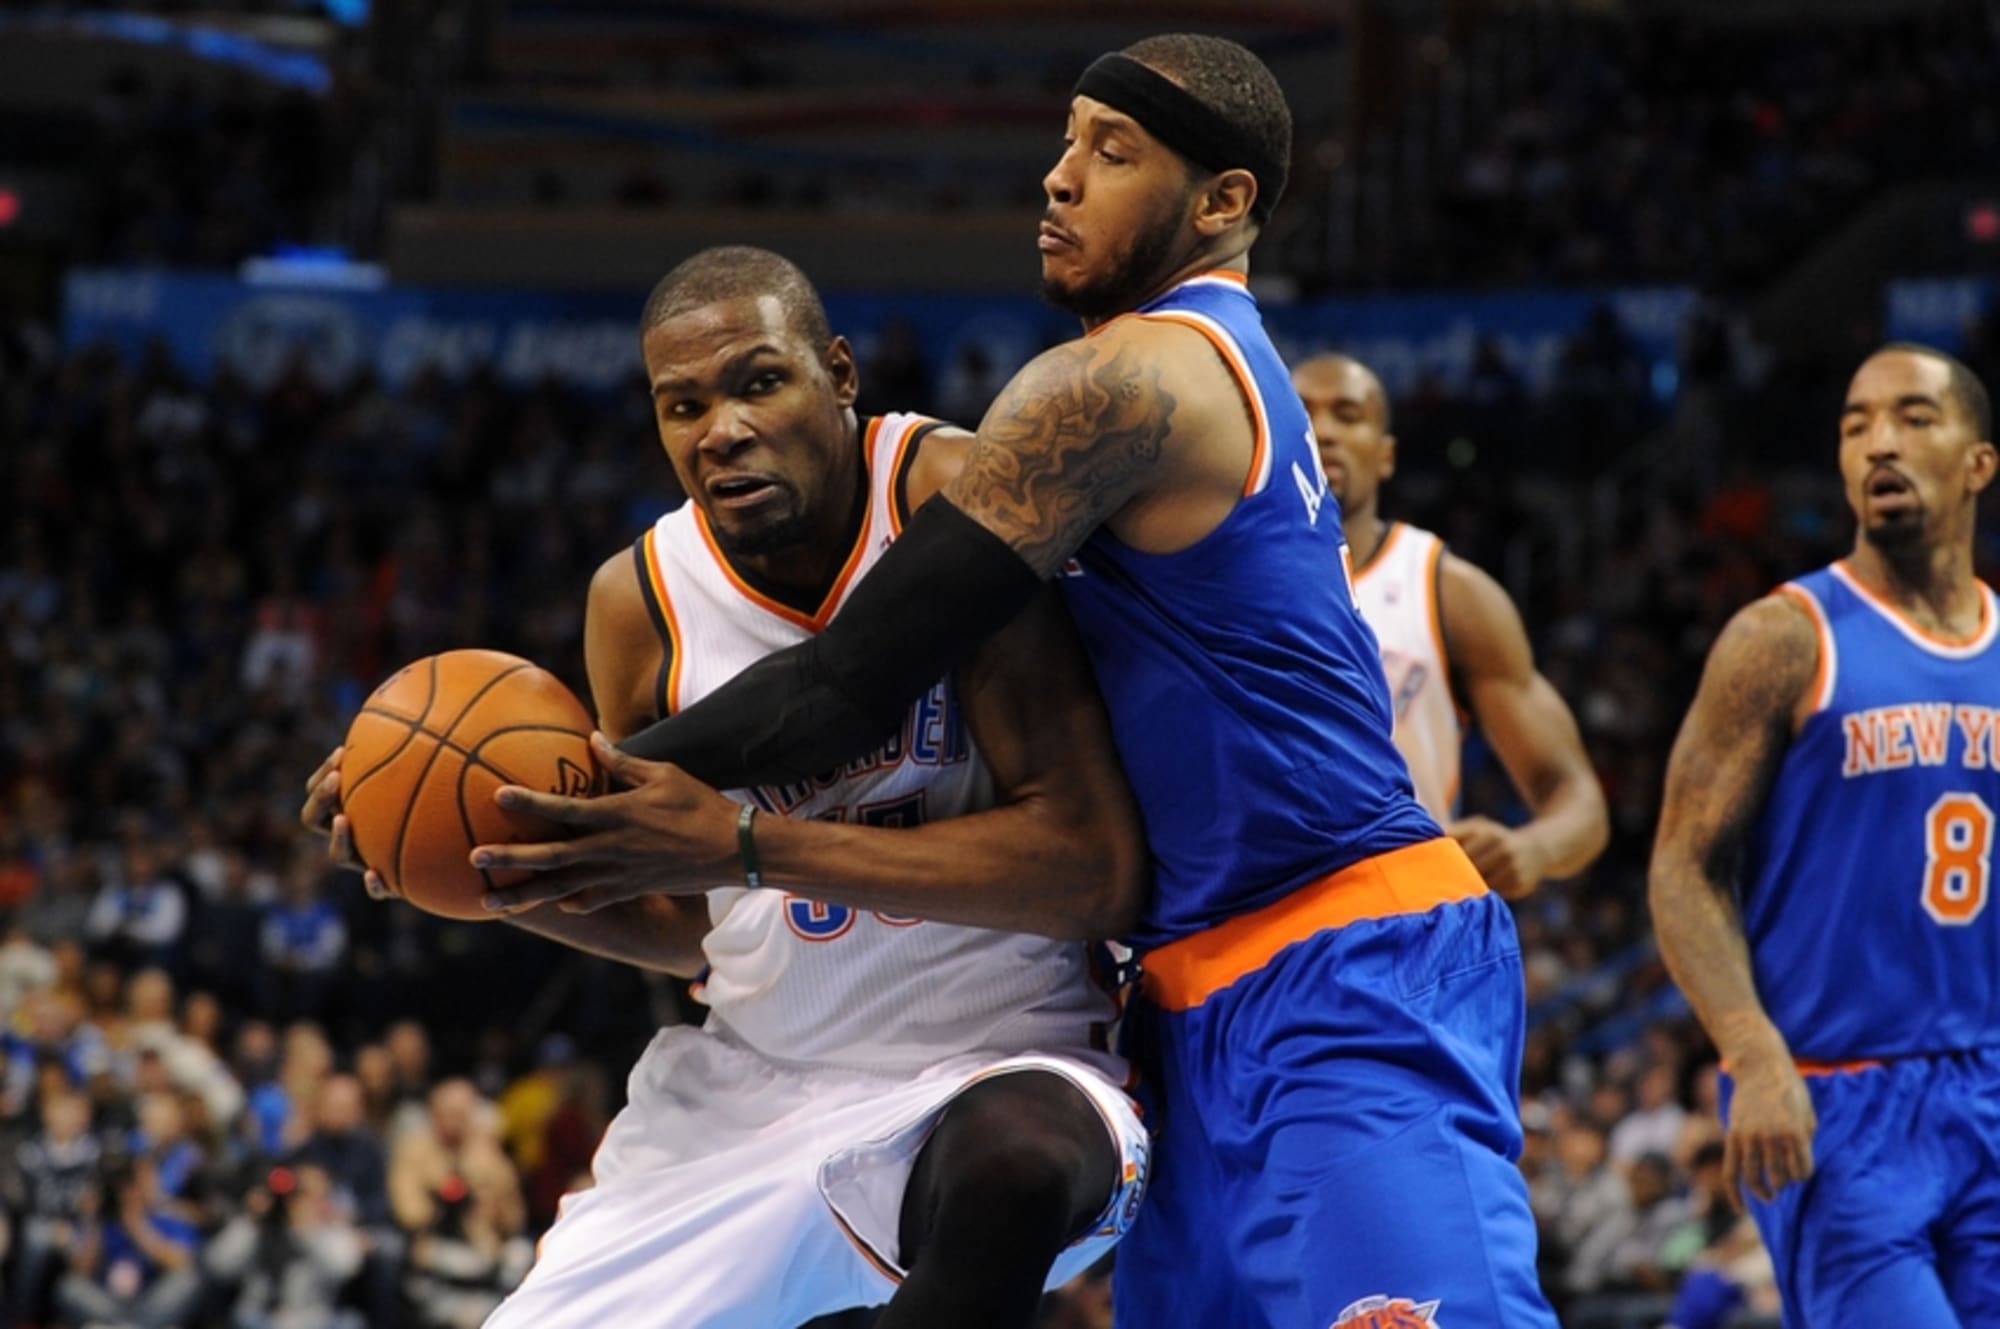 Knicks may bring Carmelo Anthony back sooner than expected - NBC